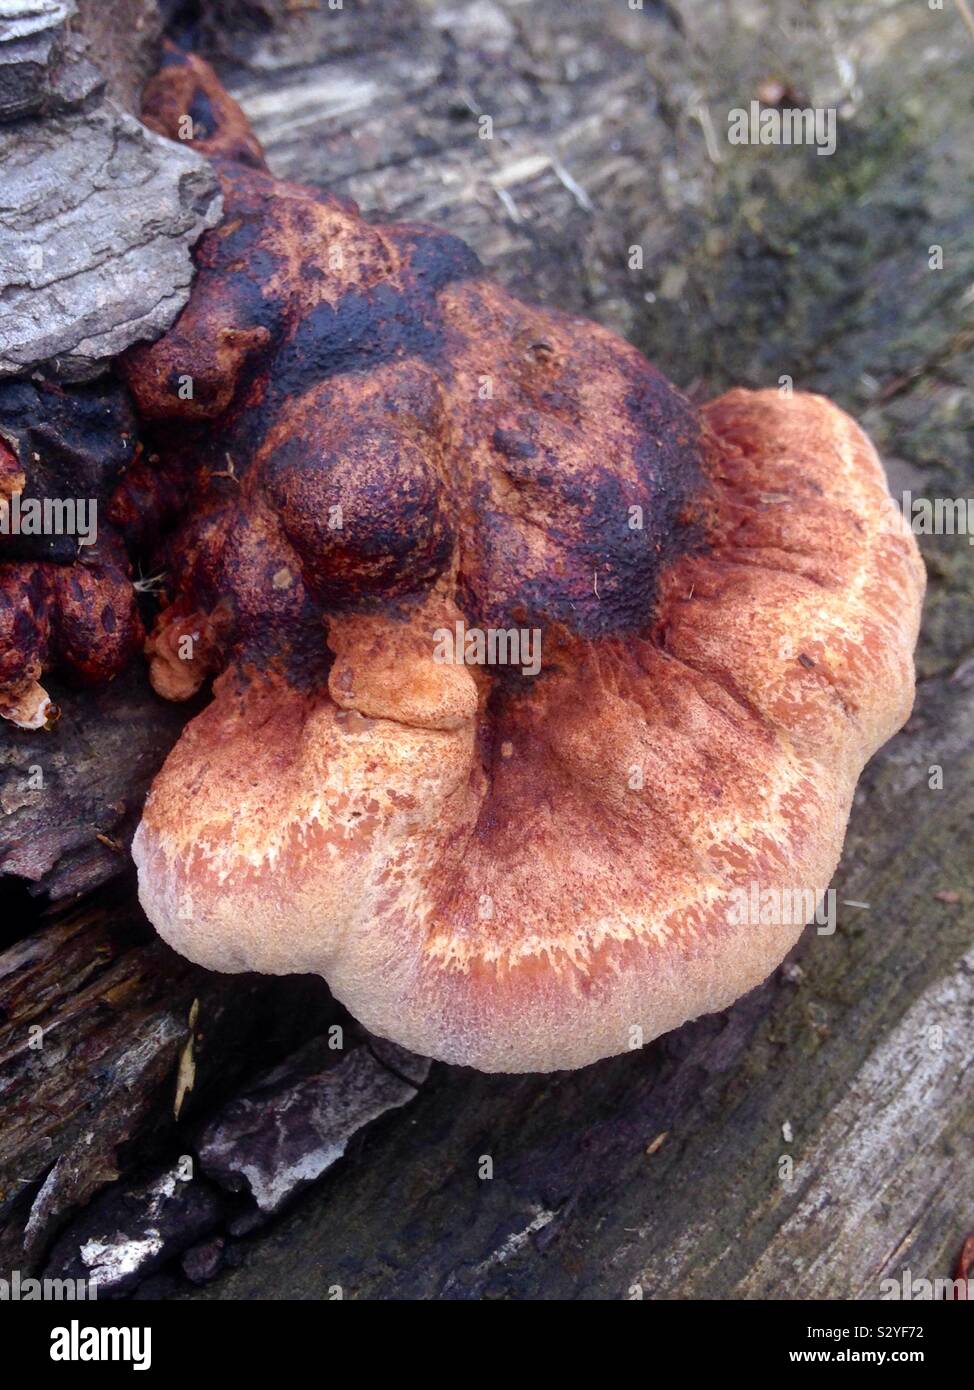 Fungus on a tree stump Stock Photo